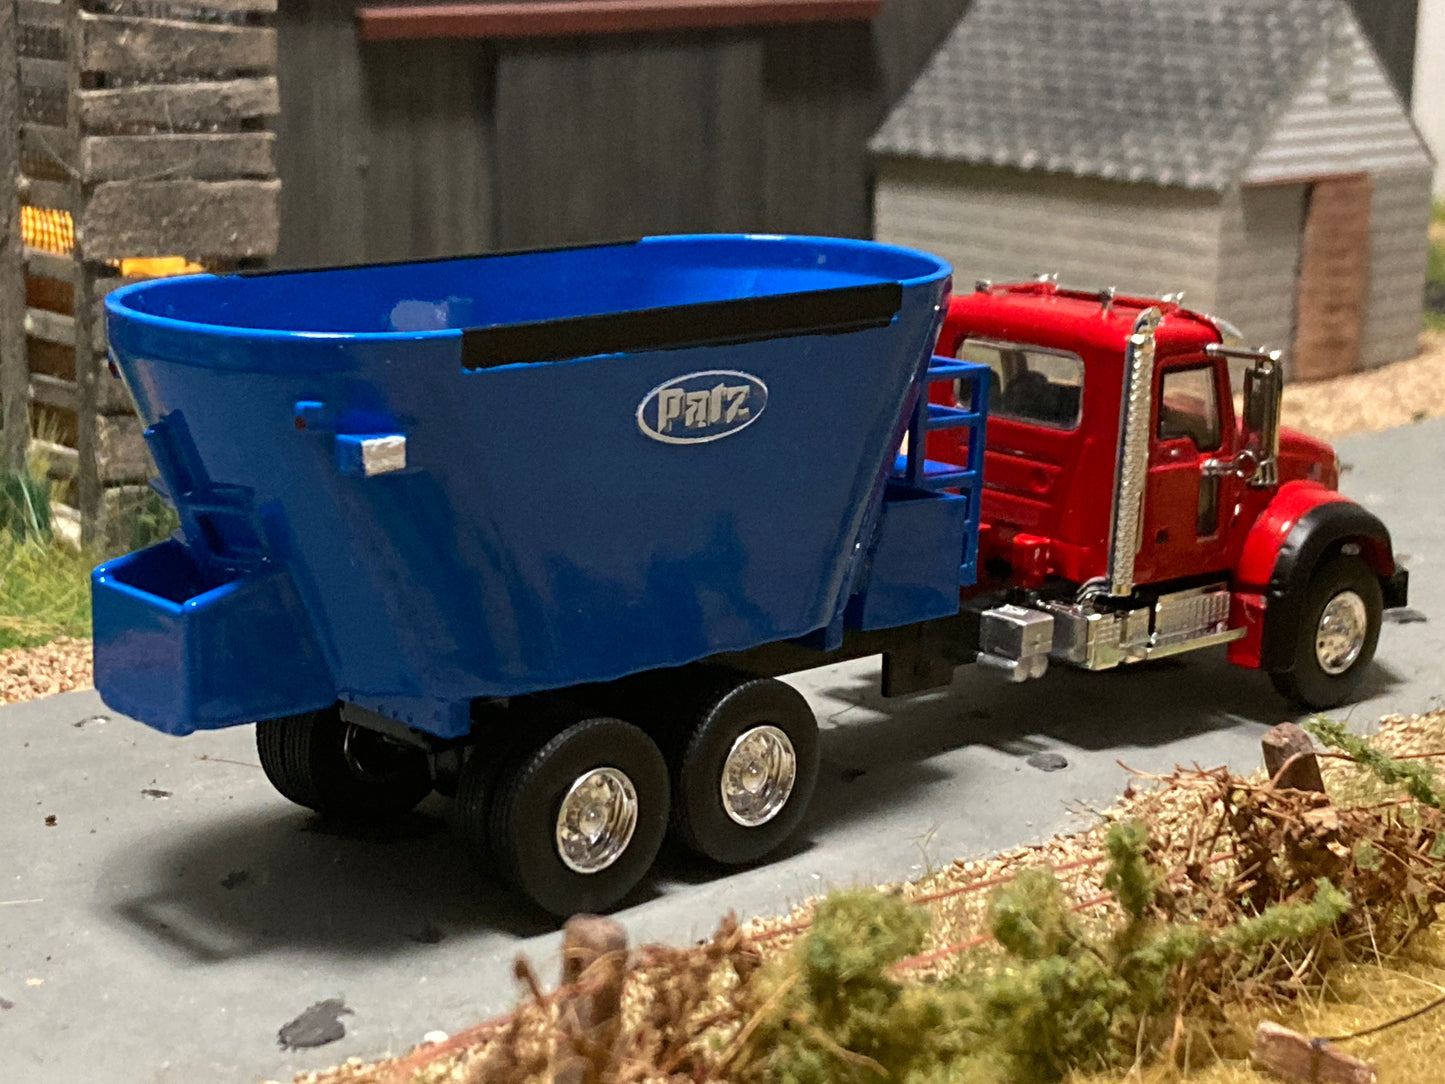 1/64 Vertical Feed Twin Screw Blue on Red Mack Granite Truck